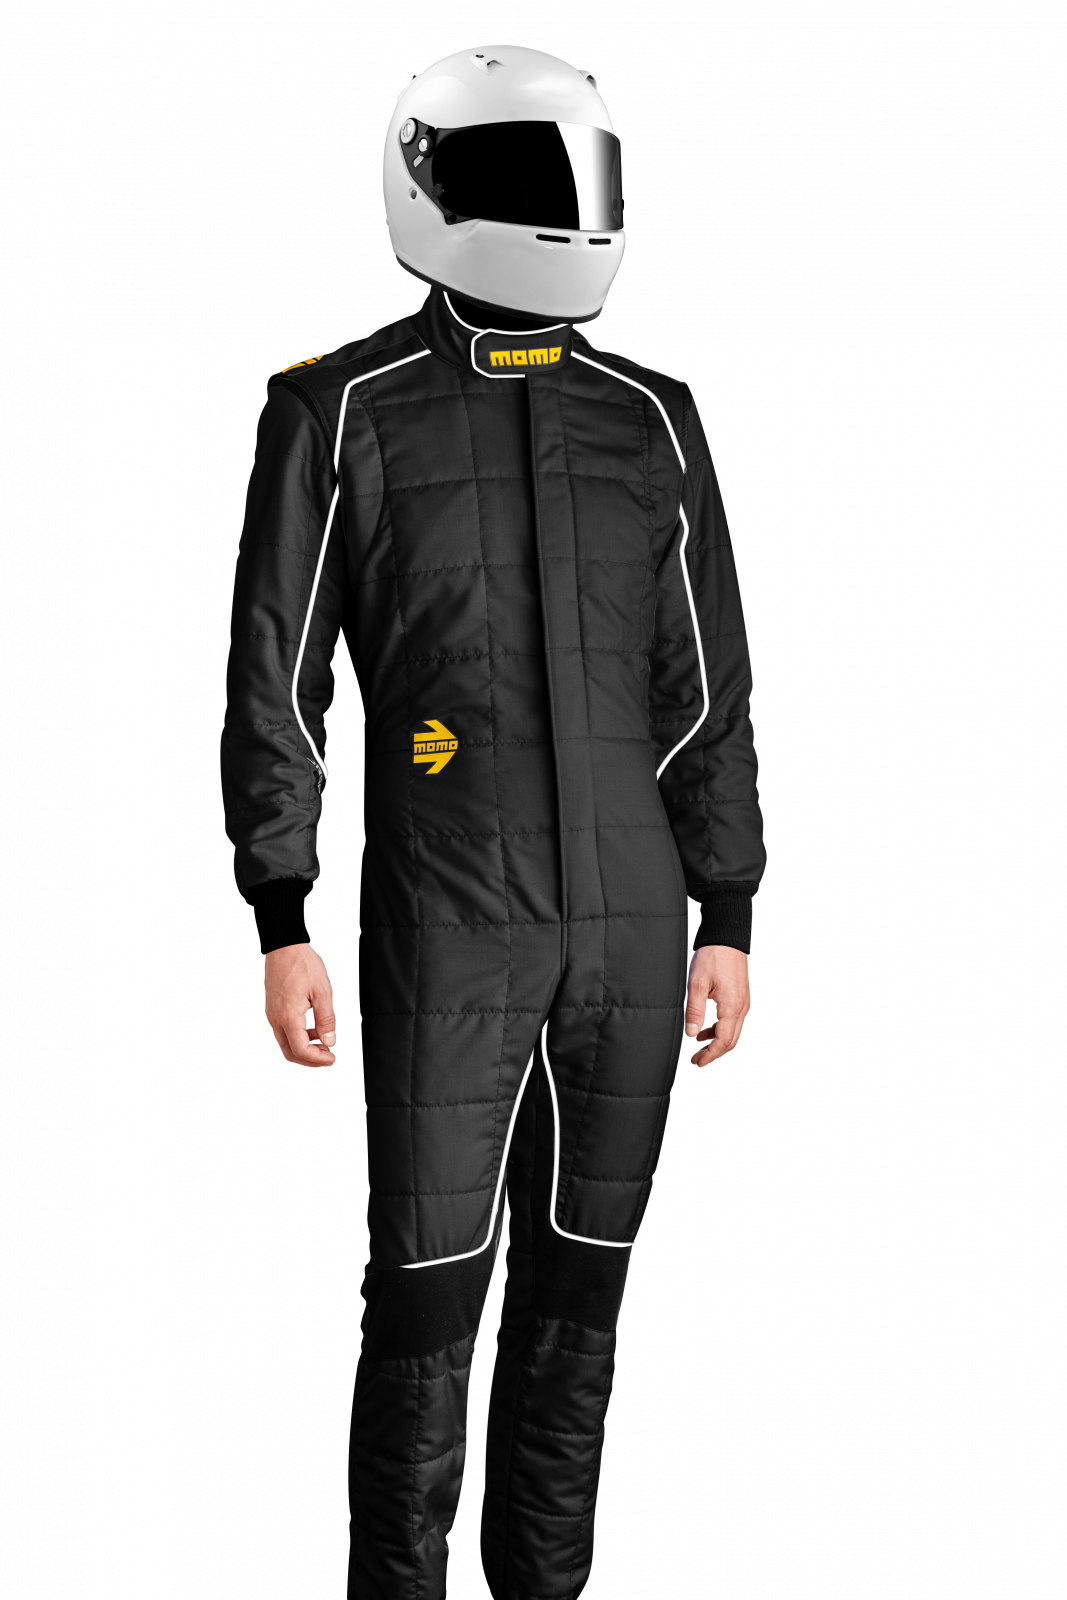 MOMO Corsa Evo Black Size 52 Racing Suit TUCOEVOBLK52